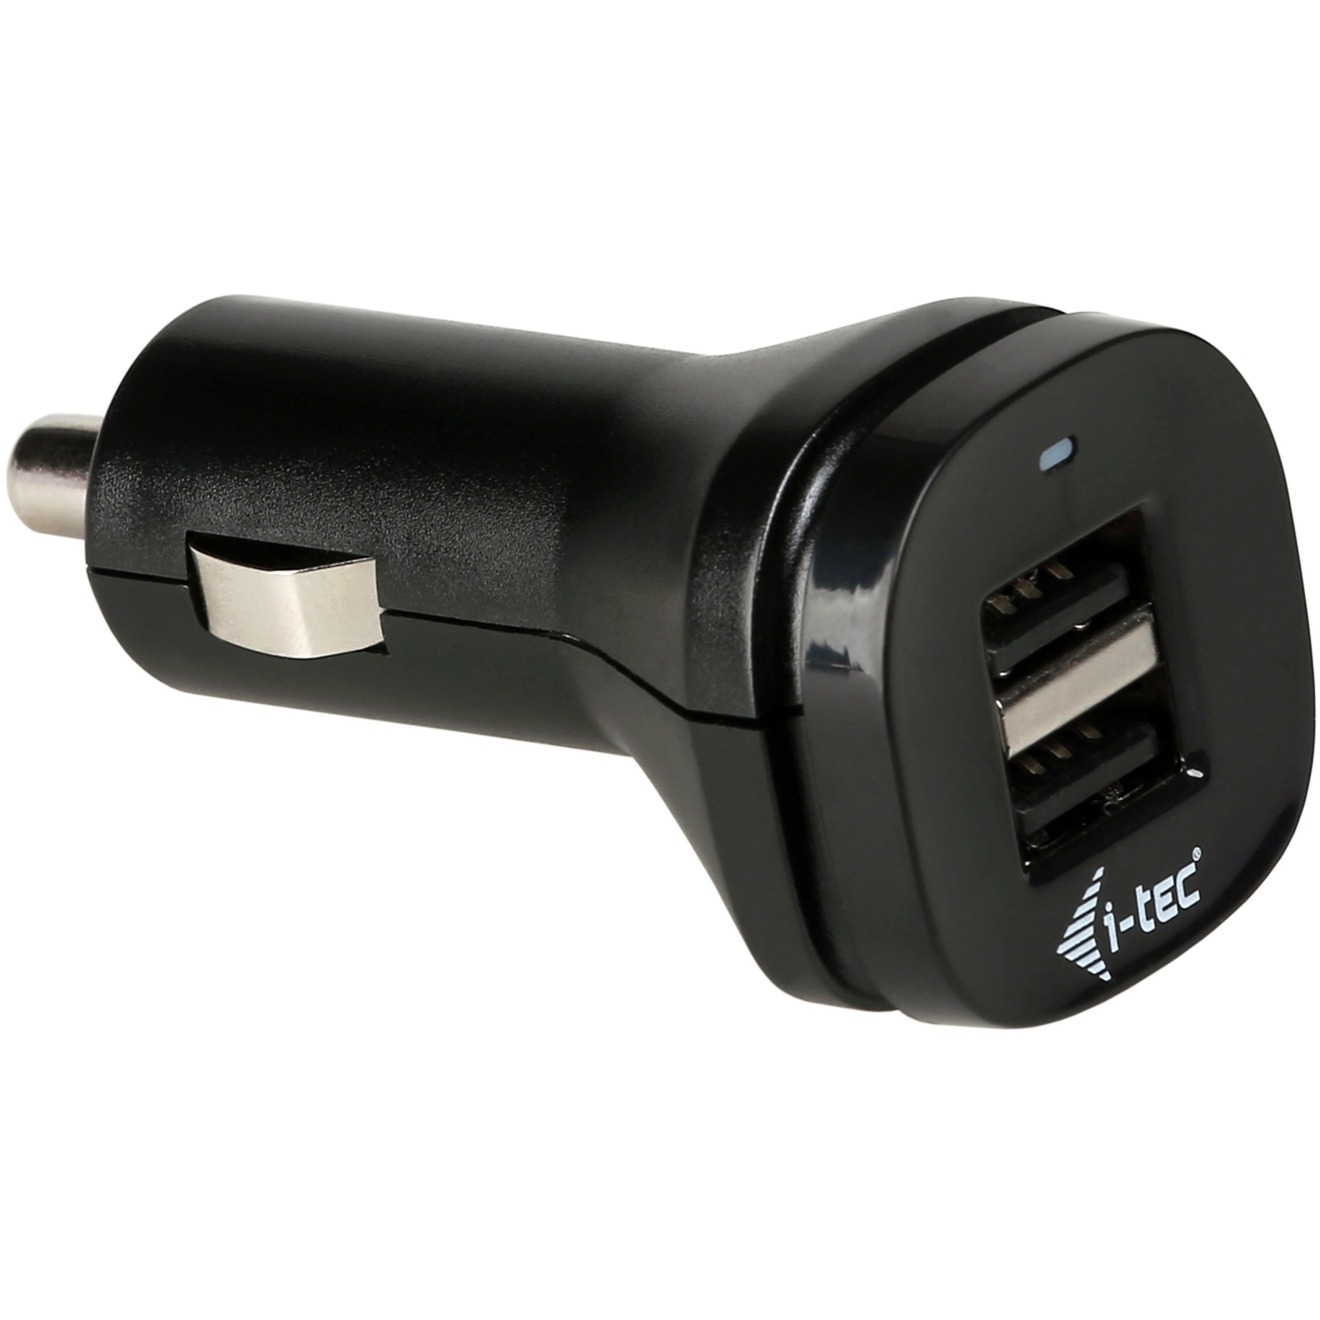 Image of Alternate - Dual USB Car Charger 2.1 A, Ladegerät online einkaufen bei Alternate